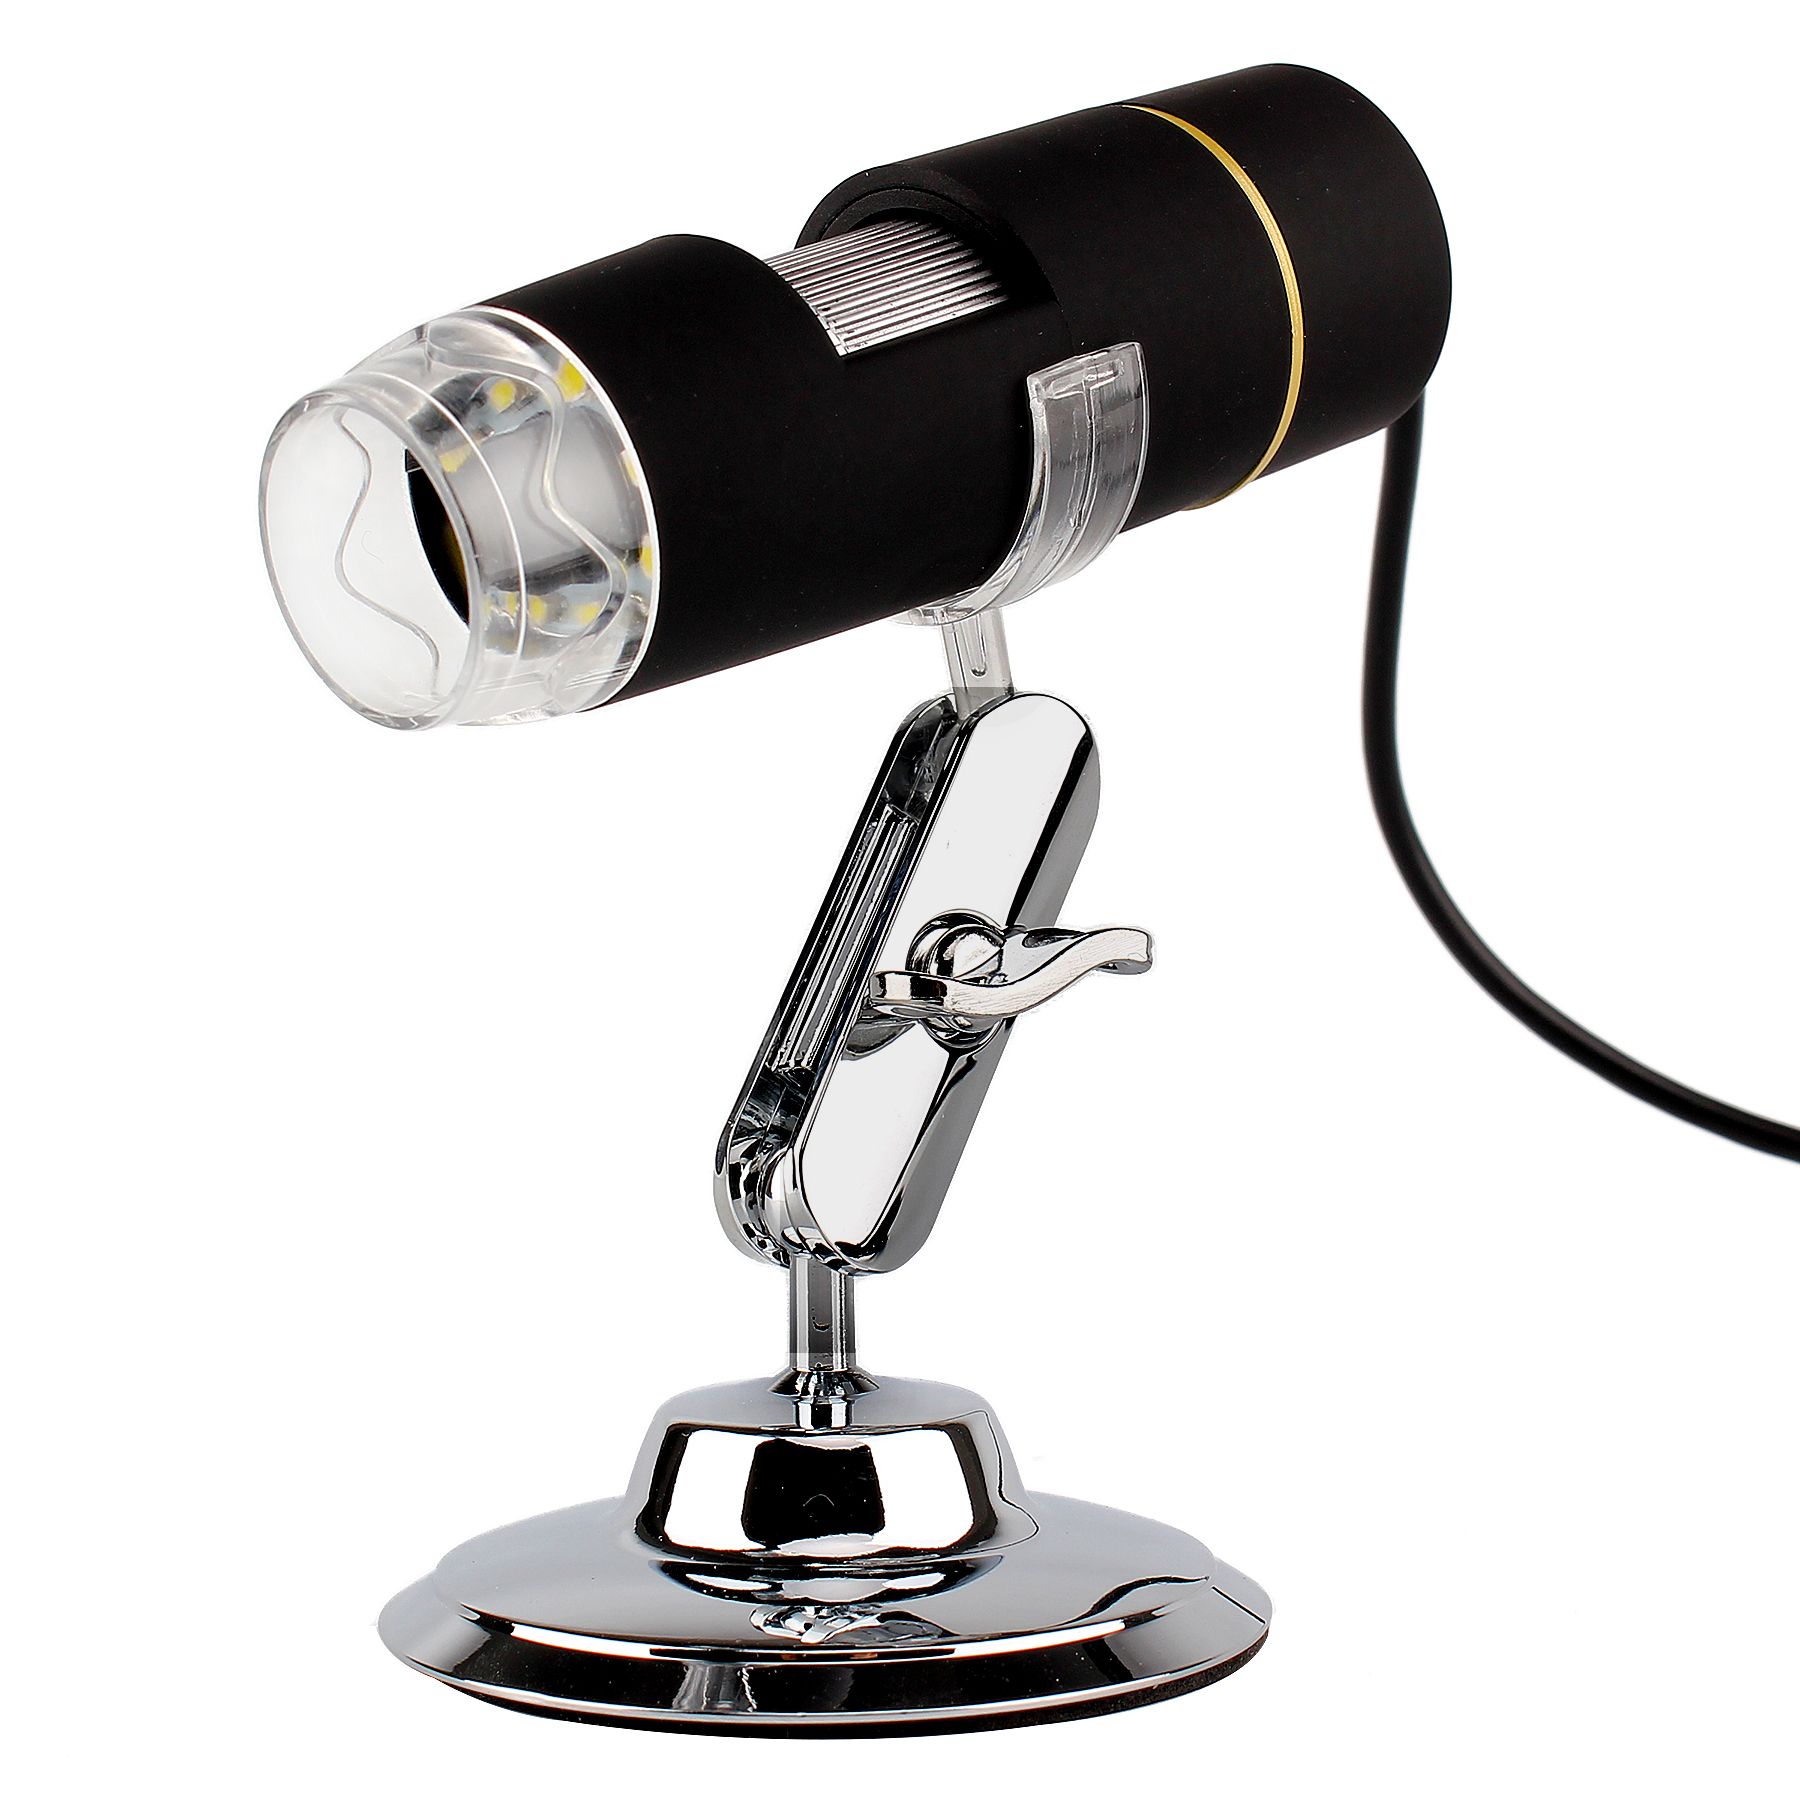 S2-USB-8-LED-1X-500X-Digital-Microscope-Endoscope-Magnifier-Video-Camera-Real-03MP13MP2MP-1043636